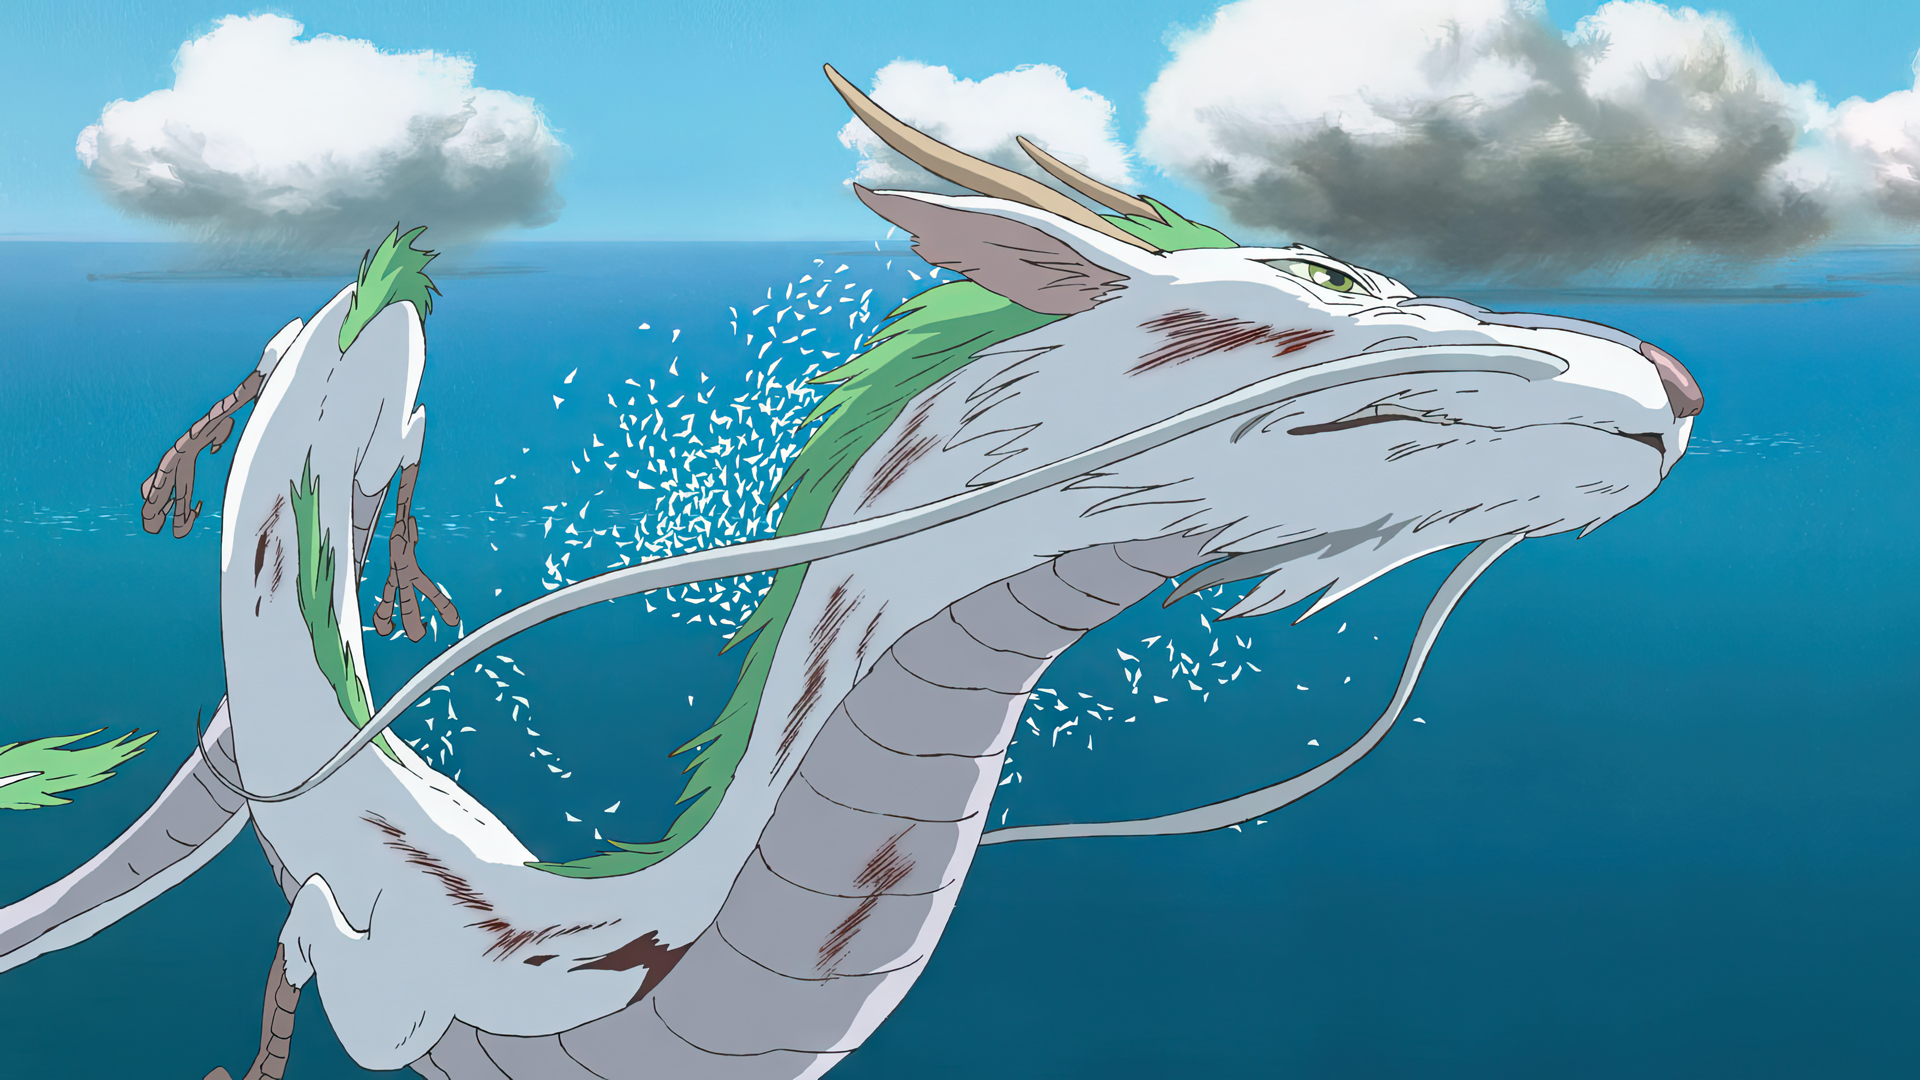 Anime 1920x1080 Spirited Away dragon animated movies film stills anime animation sky clouds water Haku Studio Ghibli Hayao Miyazaki creature Chinese dragon